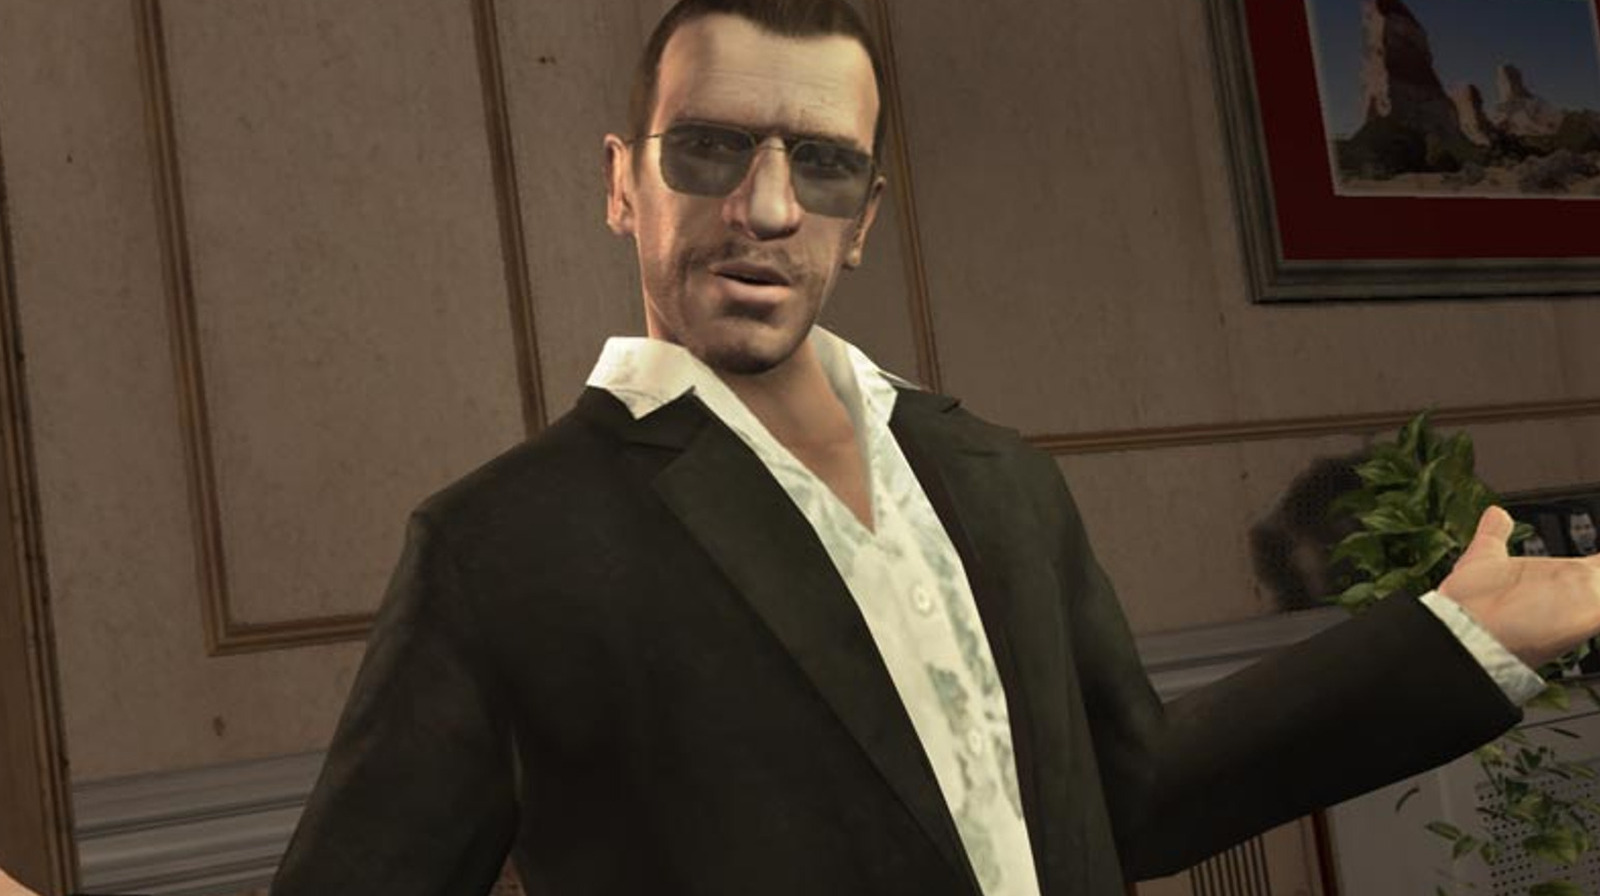 GTA: What Happened To Niko Bellic Before Grand Theft Auto 4